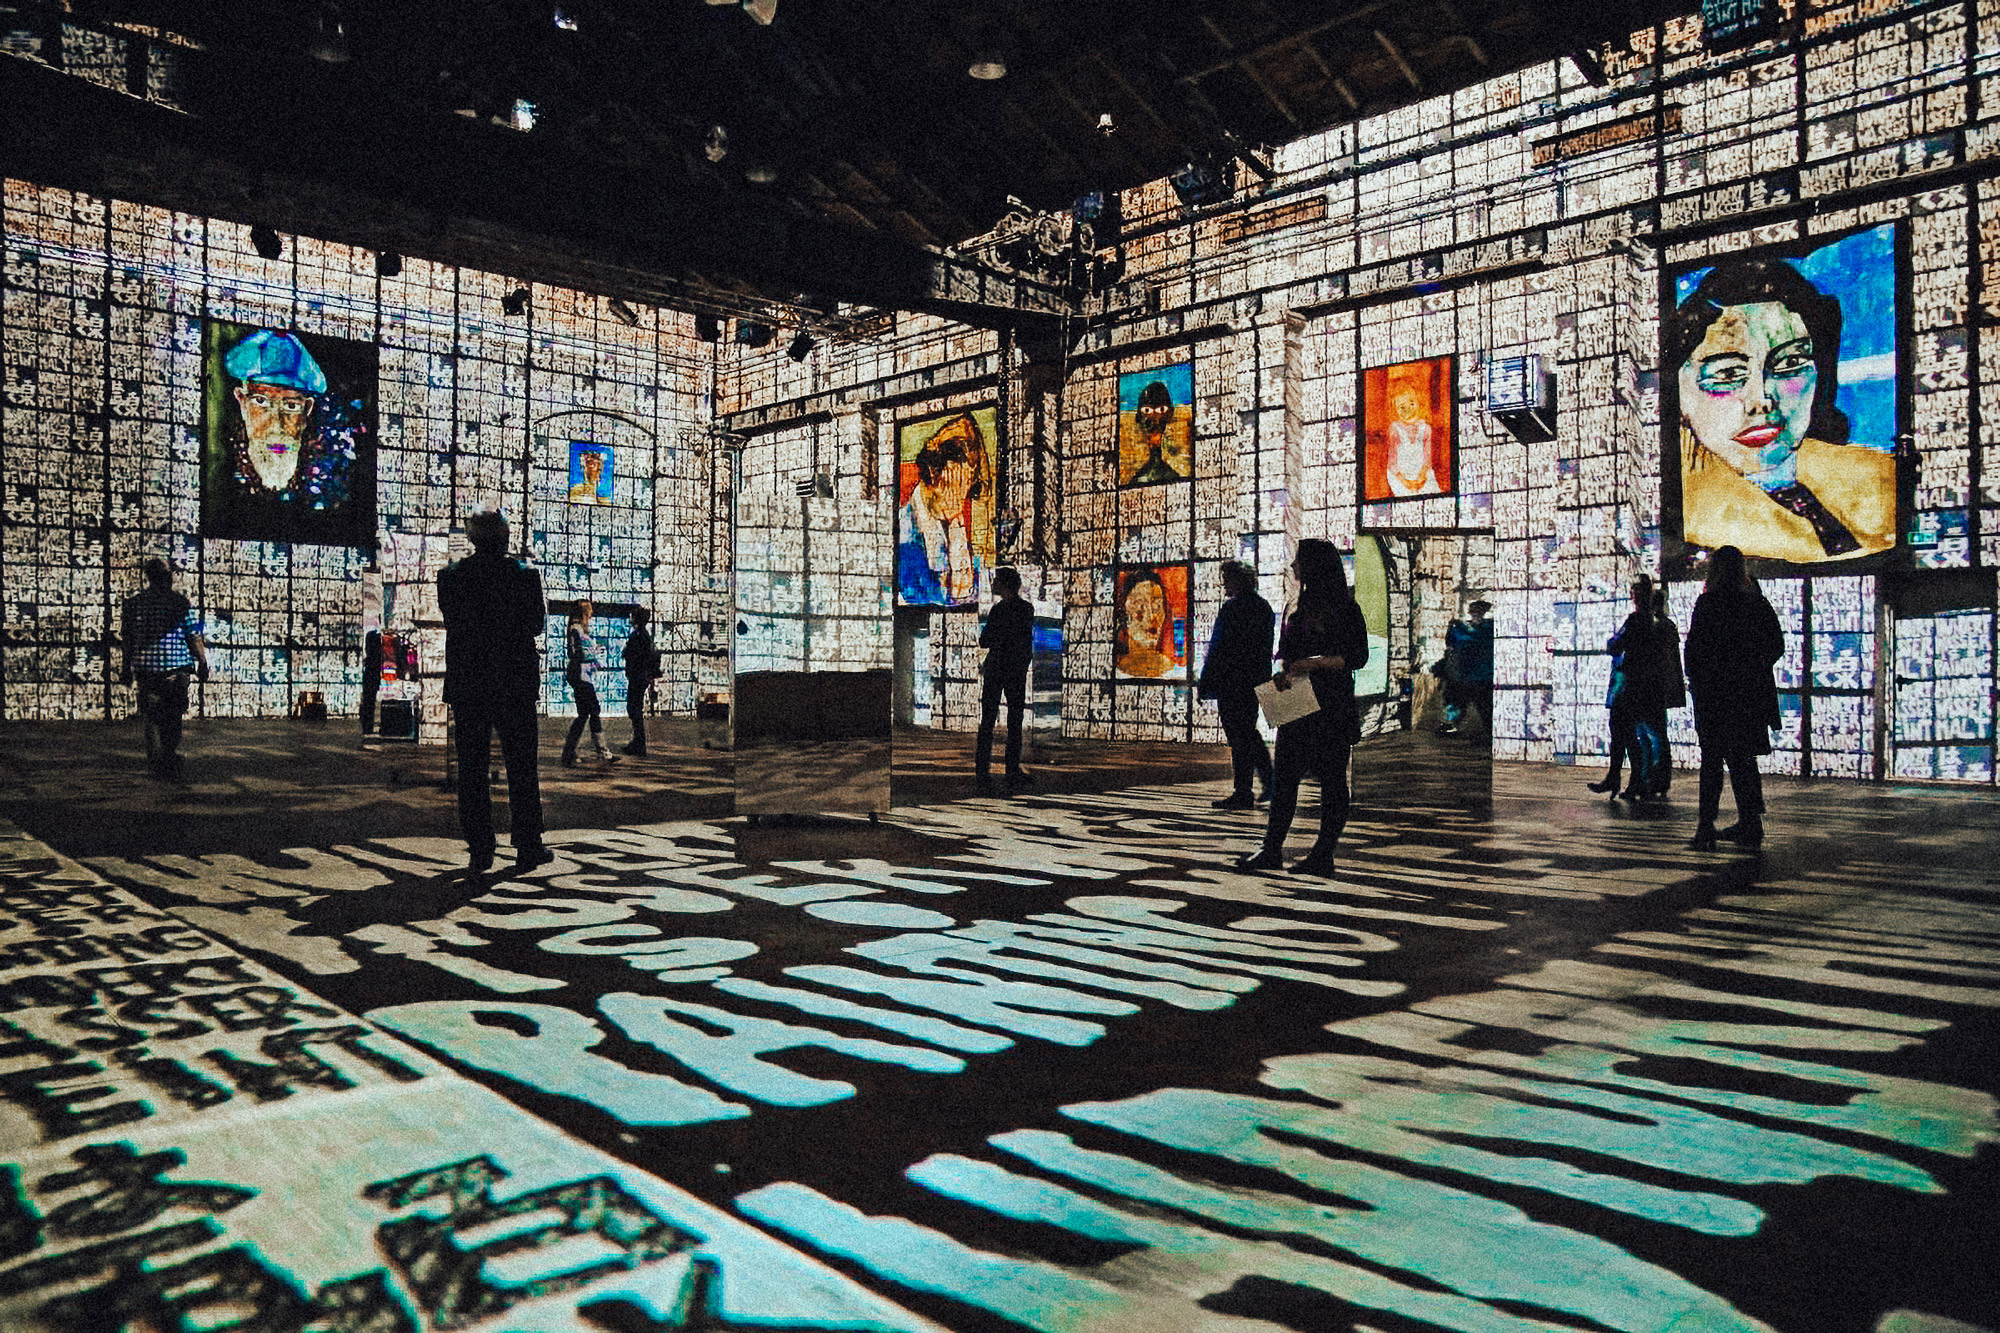 Video installation with art by Hundertwasser